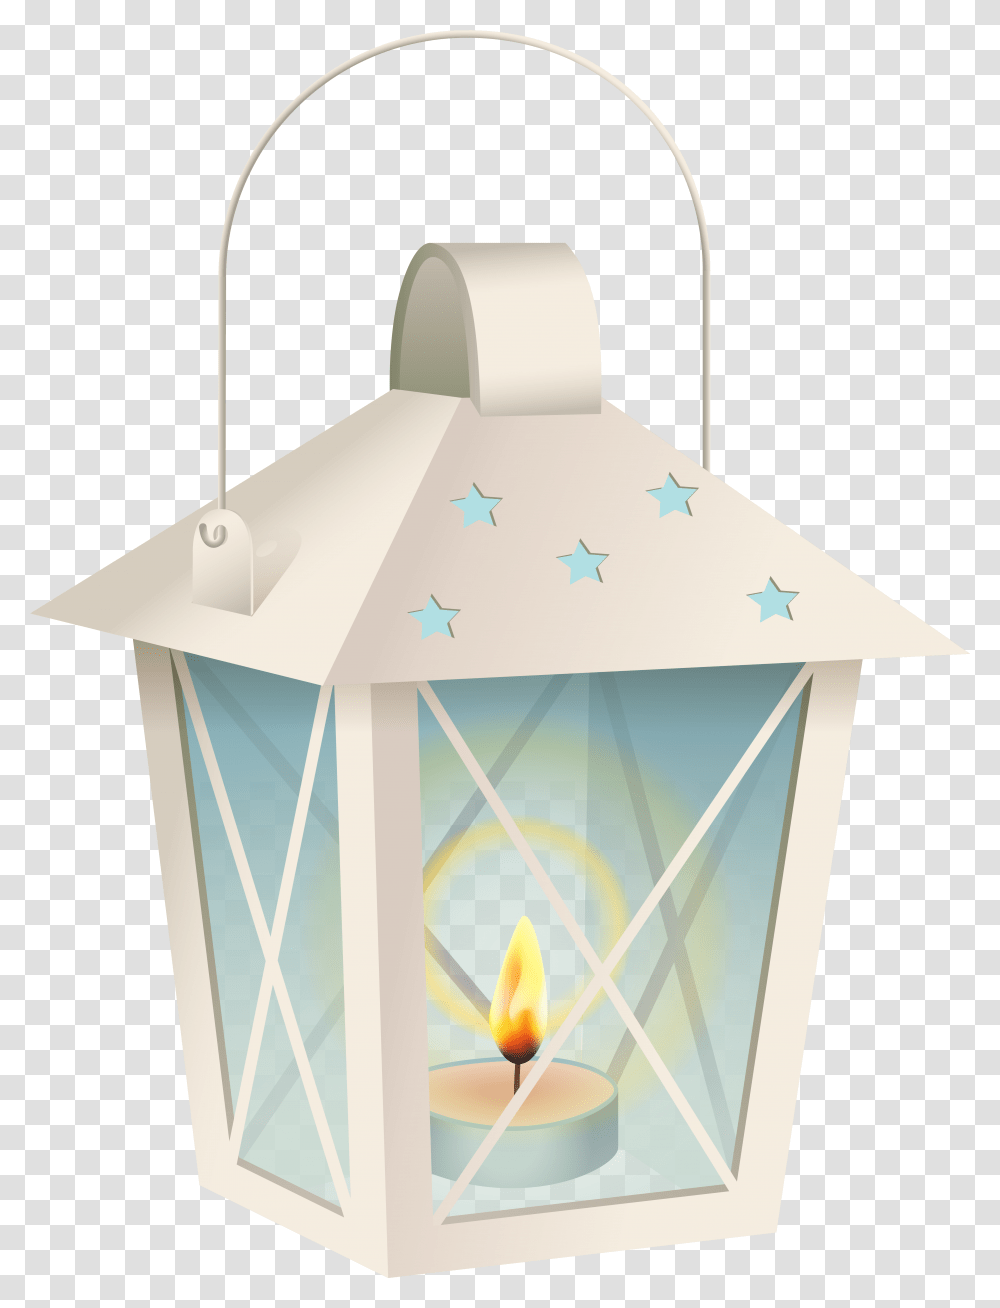 Decorative Winter Lantern Clipart Image Candle, Lamp Transparent Png